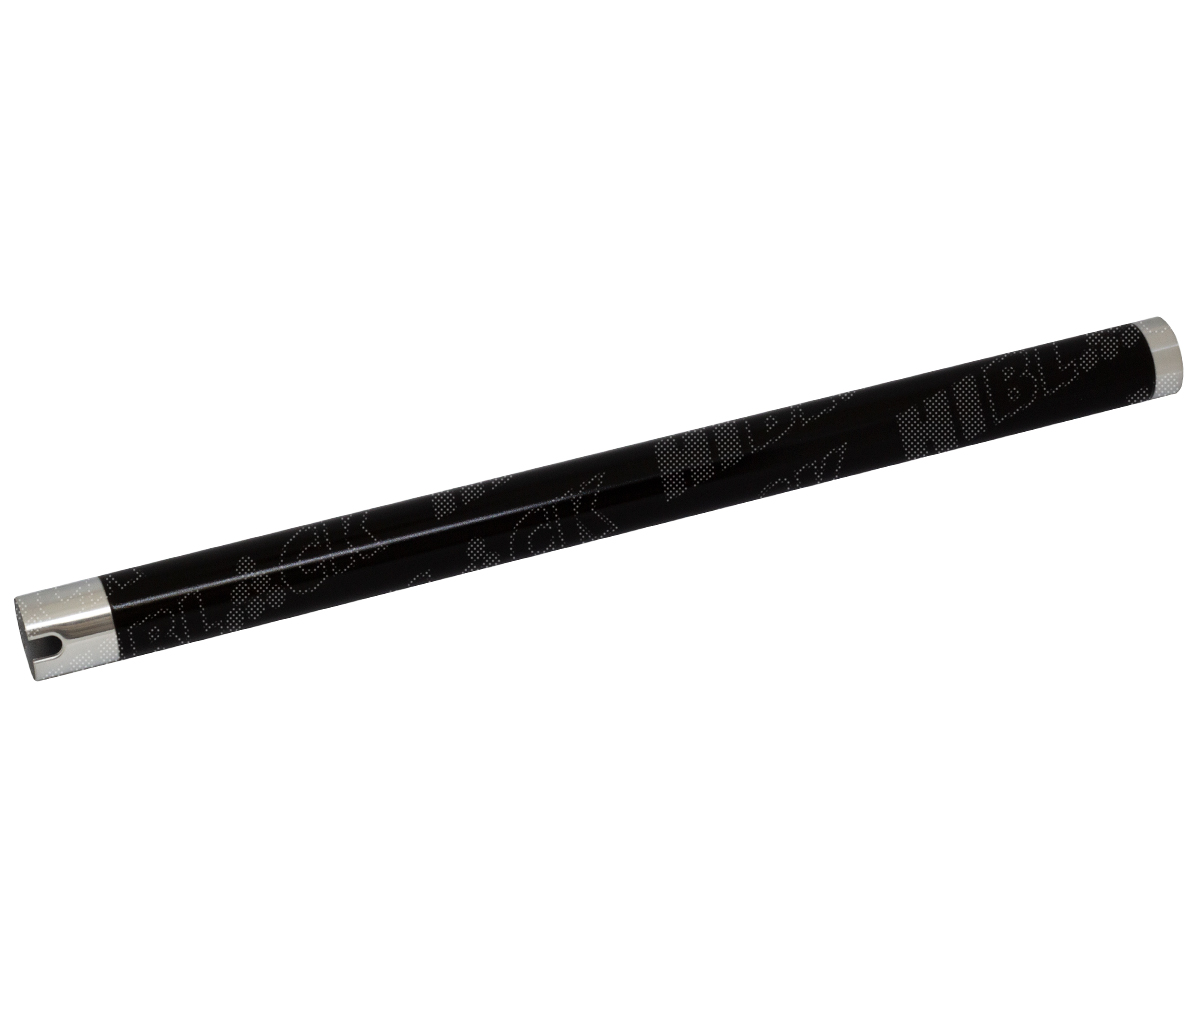 Вал тефлоновый верхний Hi-Black для Kyocera TASKalfa 1800/2200/1801/2201